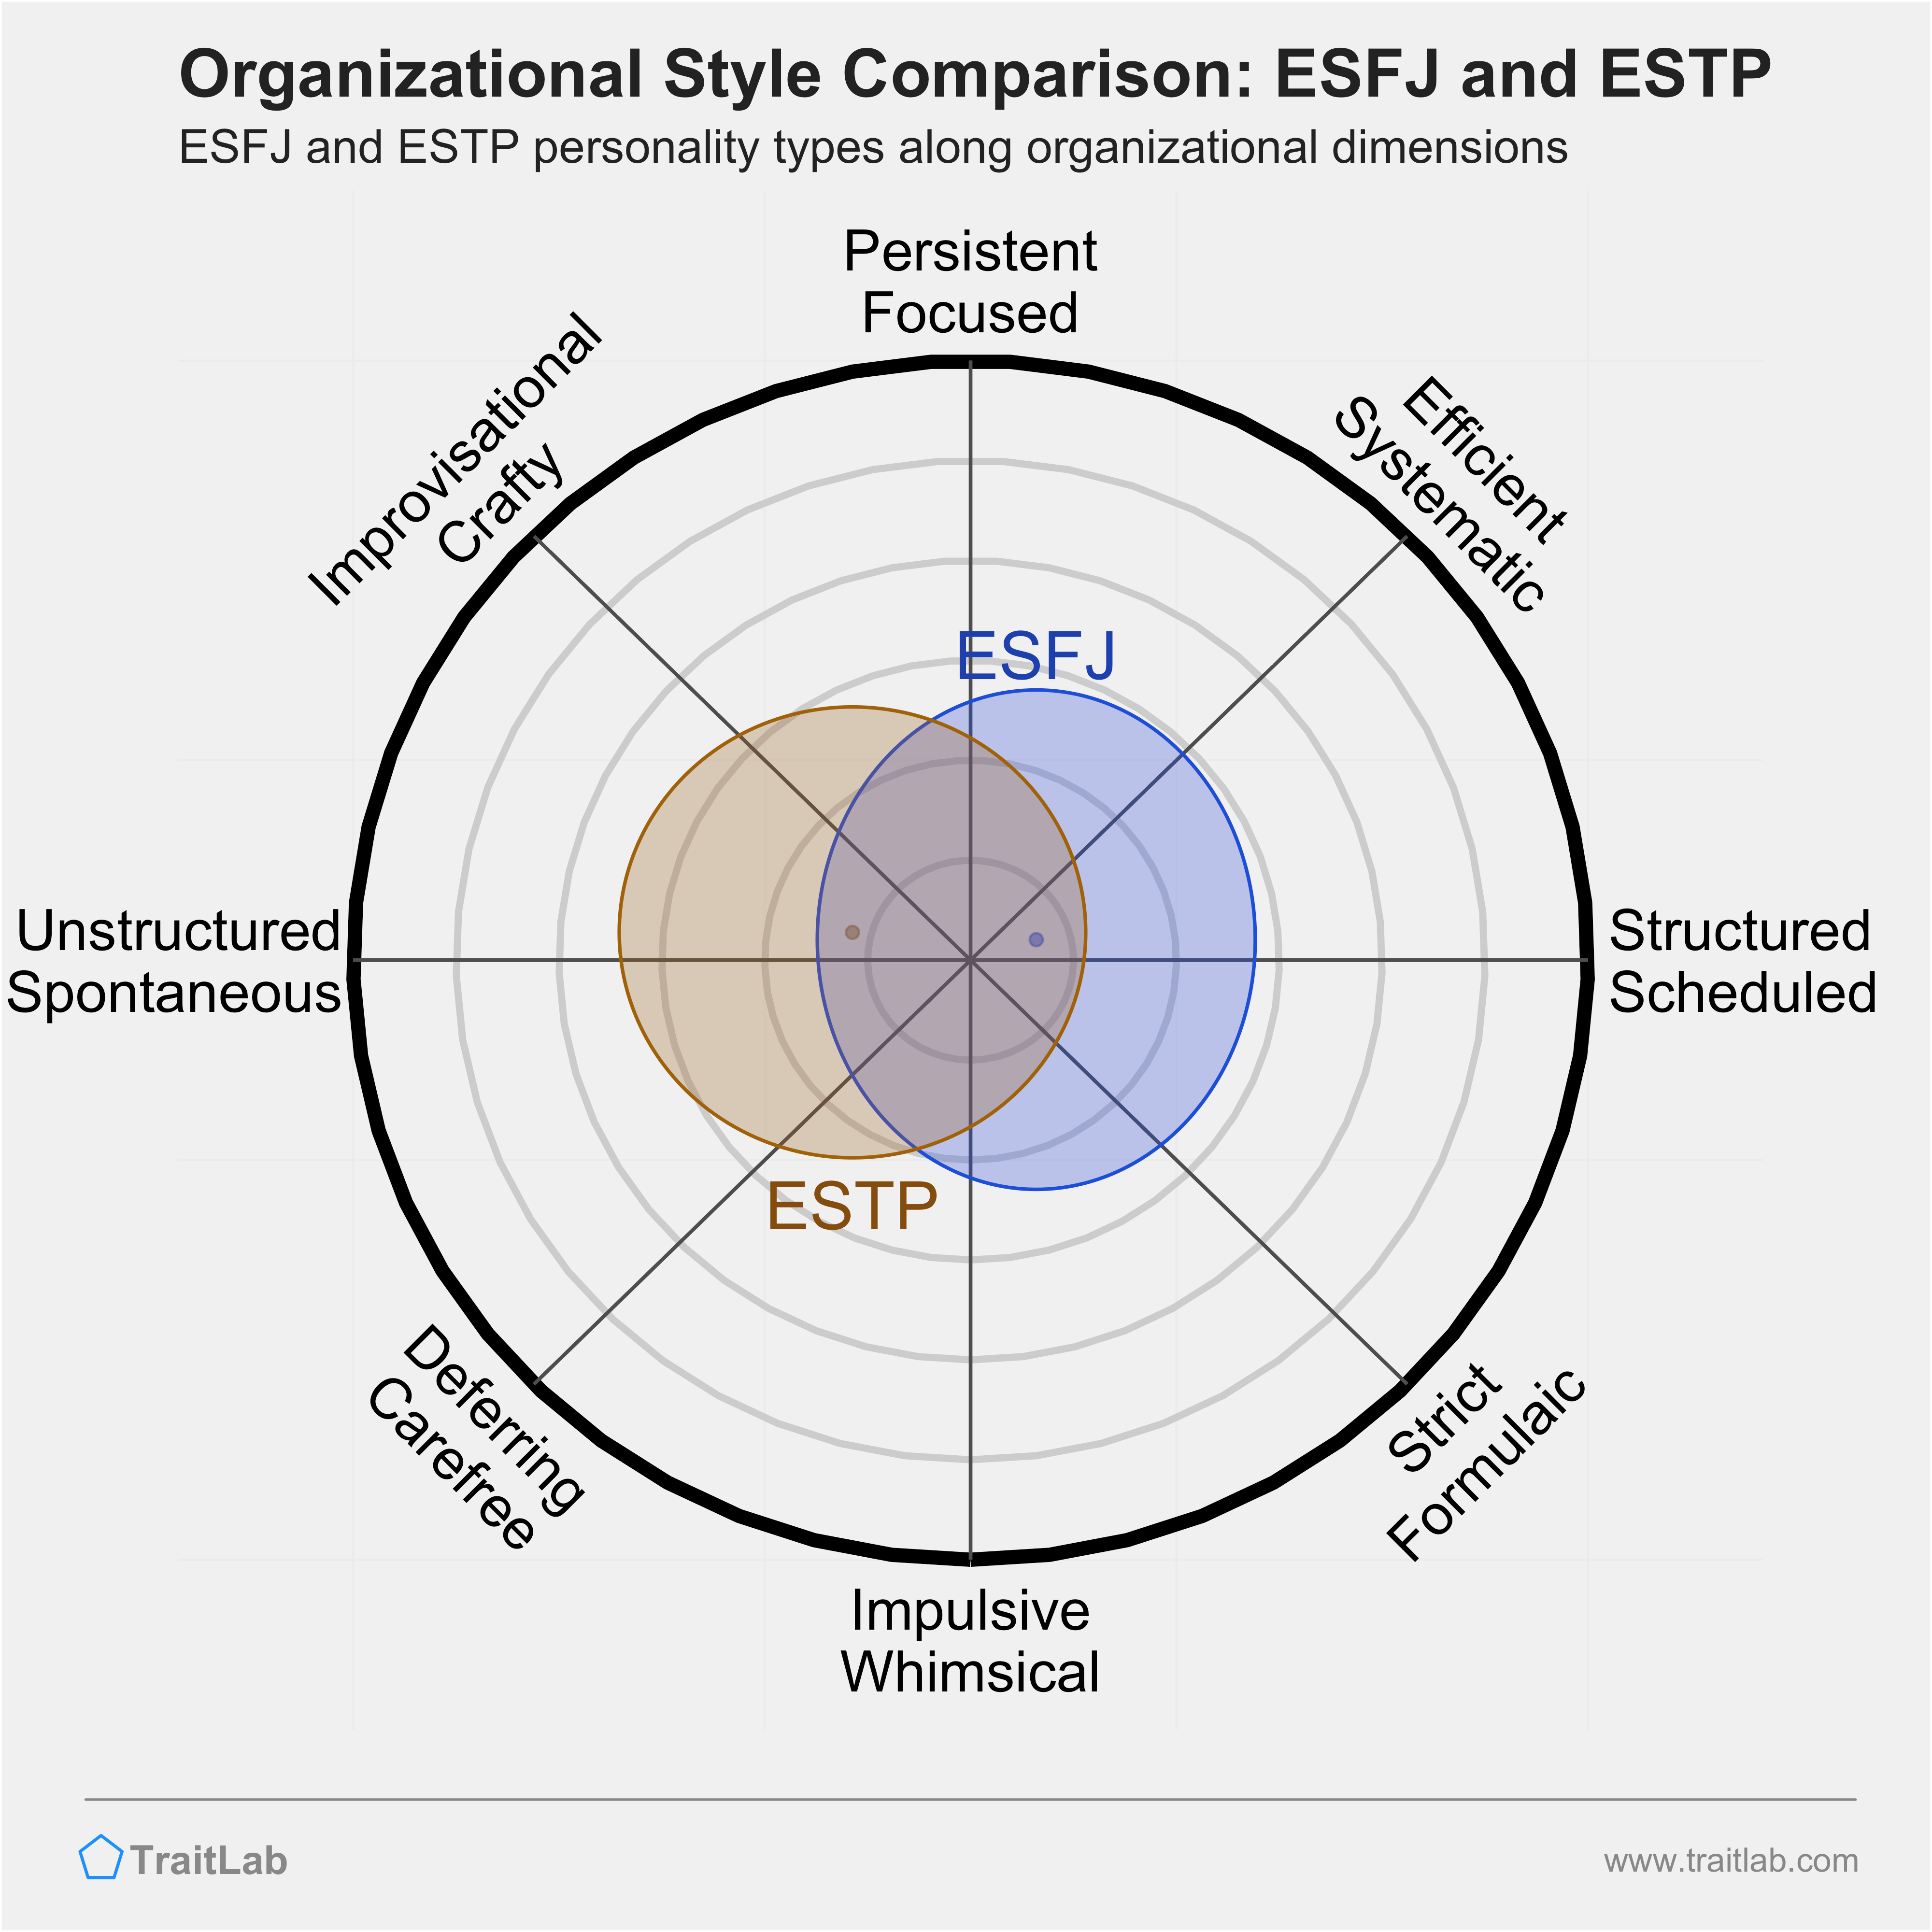 ESFJ and ESTP comparison across organizational dimensions